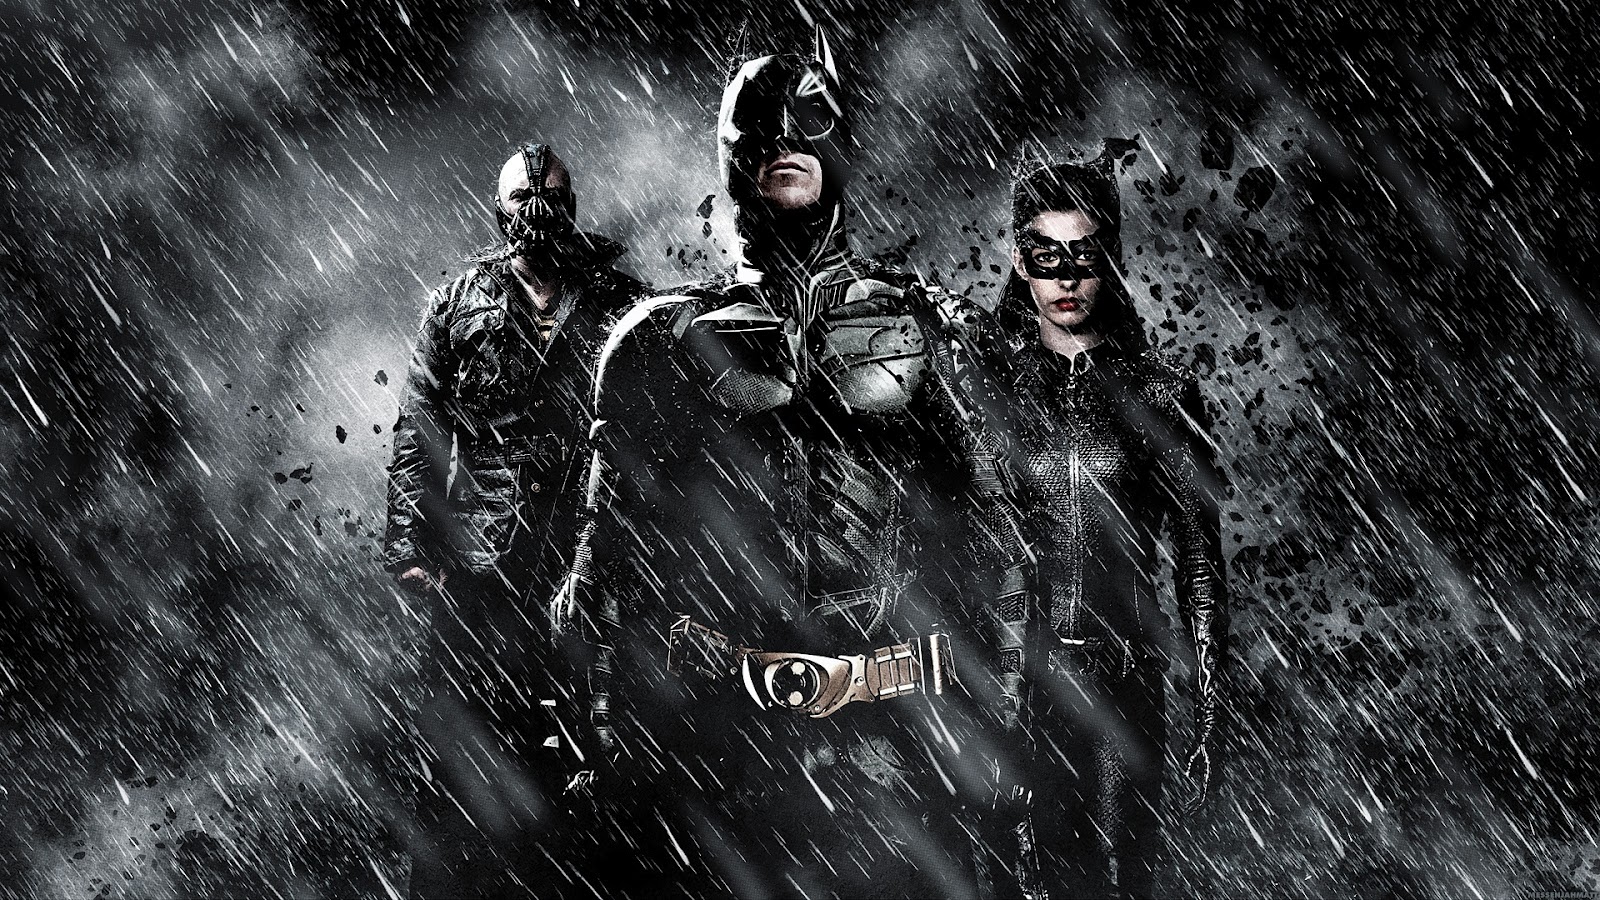 http://3.bp.blogspot.com/-OJgh4n3pIlg/T9oPTl586-I/AAAAAAAAfNw/4vT0-05WREY/s1600/Batman-The-Dark-Knight-Rises_Wallpapers-HD.jpg